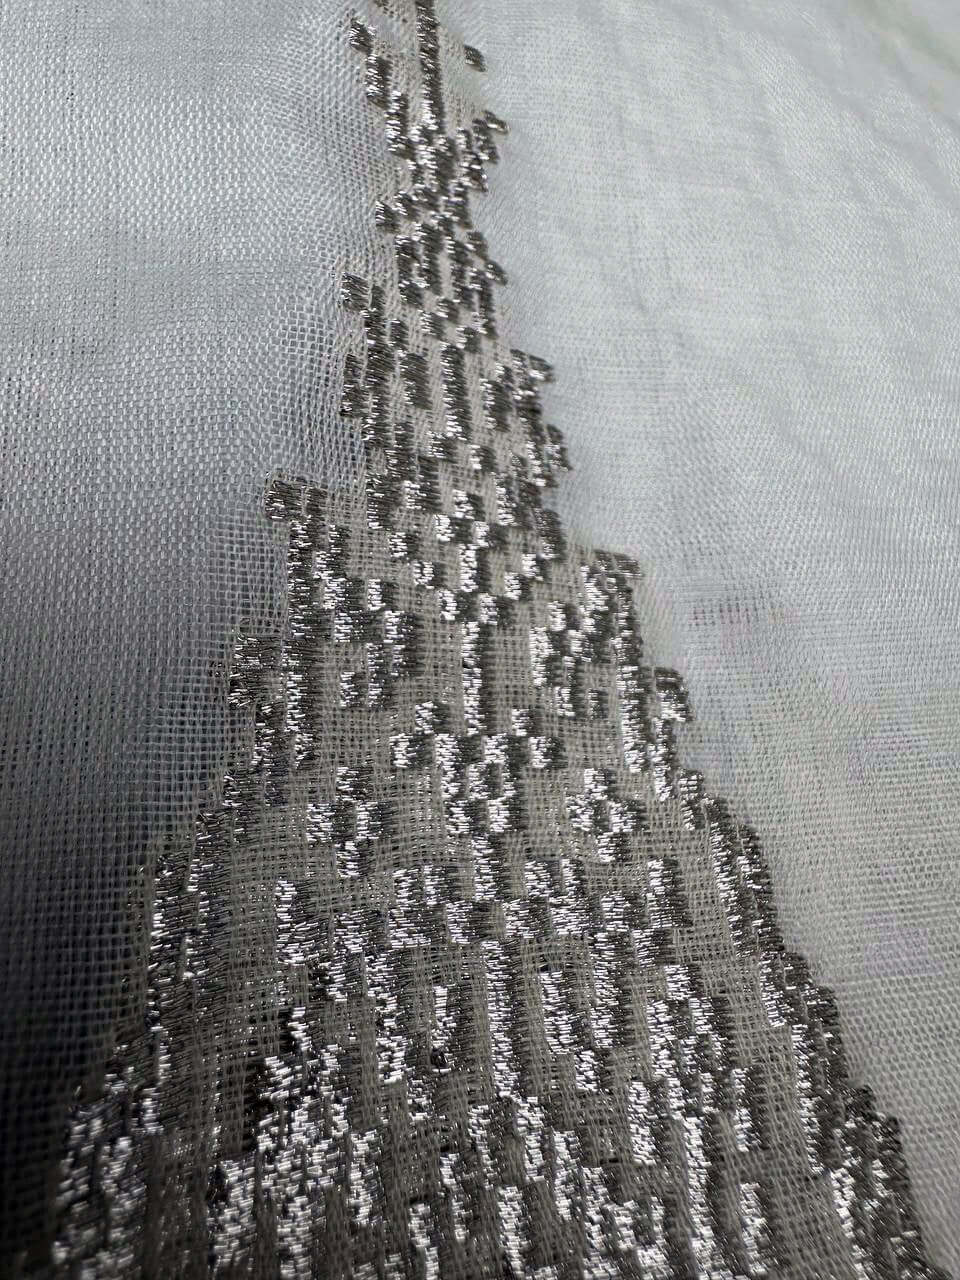 Ranee's Cloth (White & Silver)handwoven silk songket shawl textile